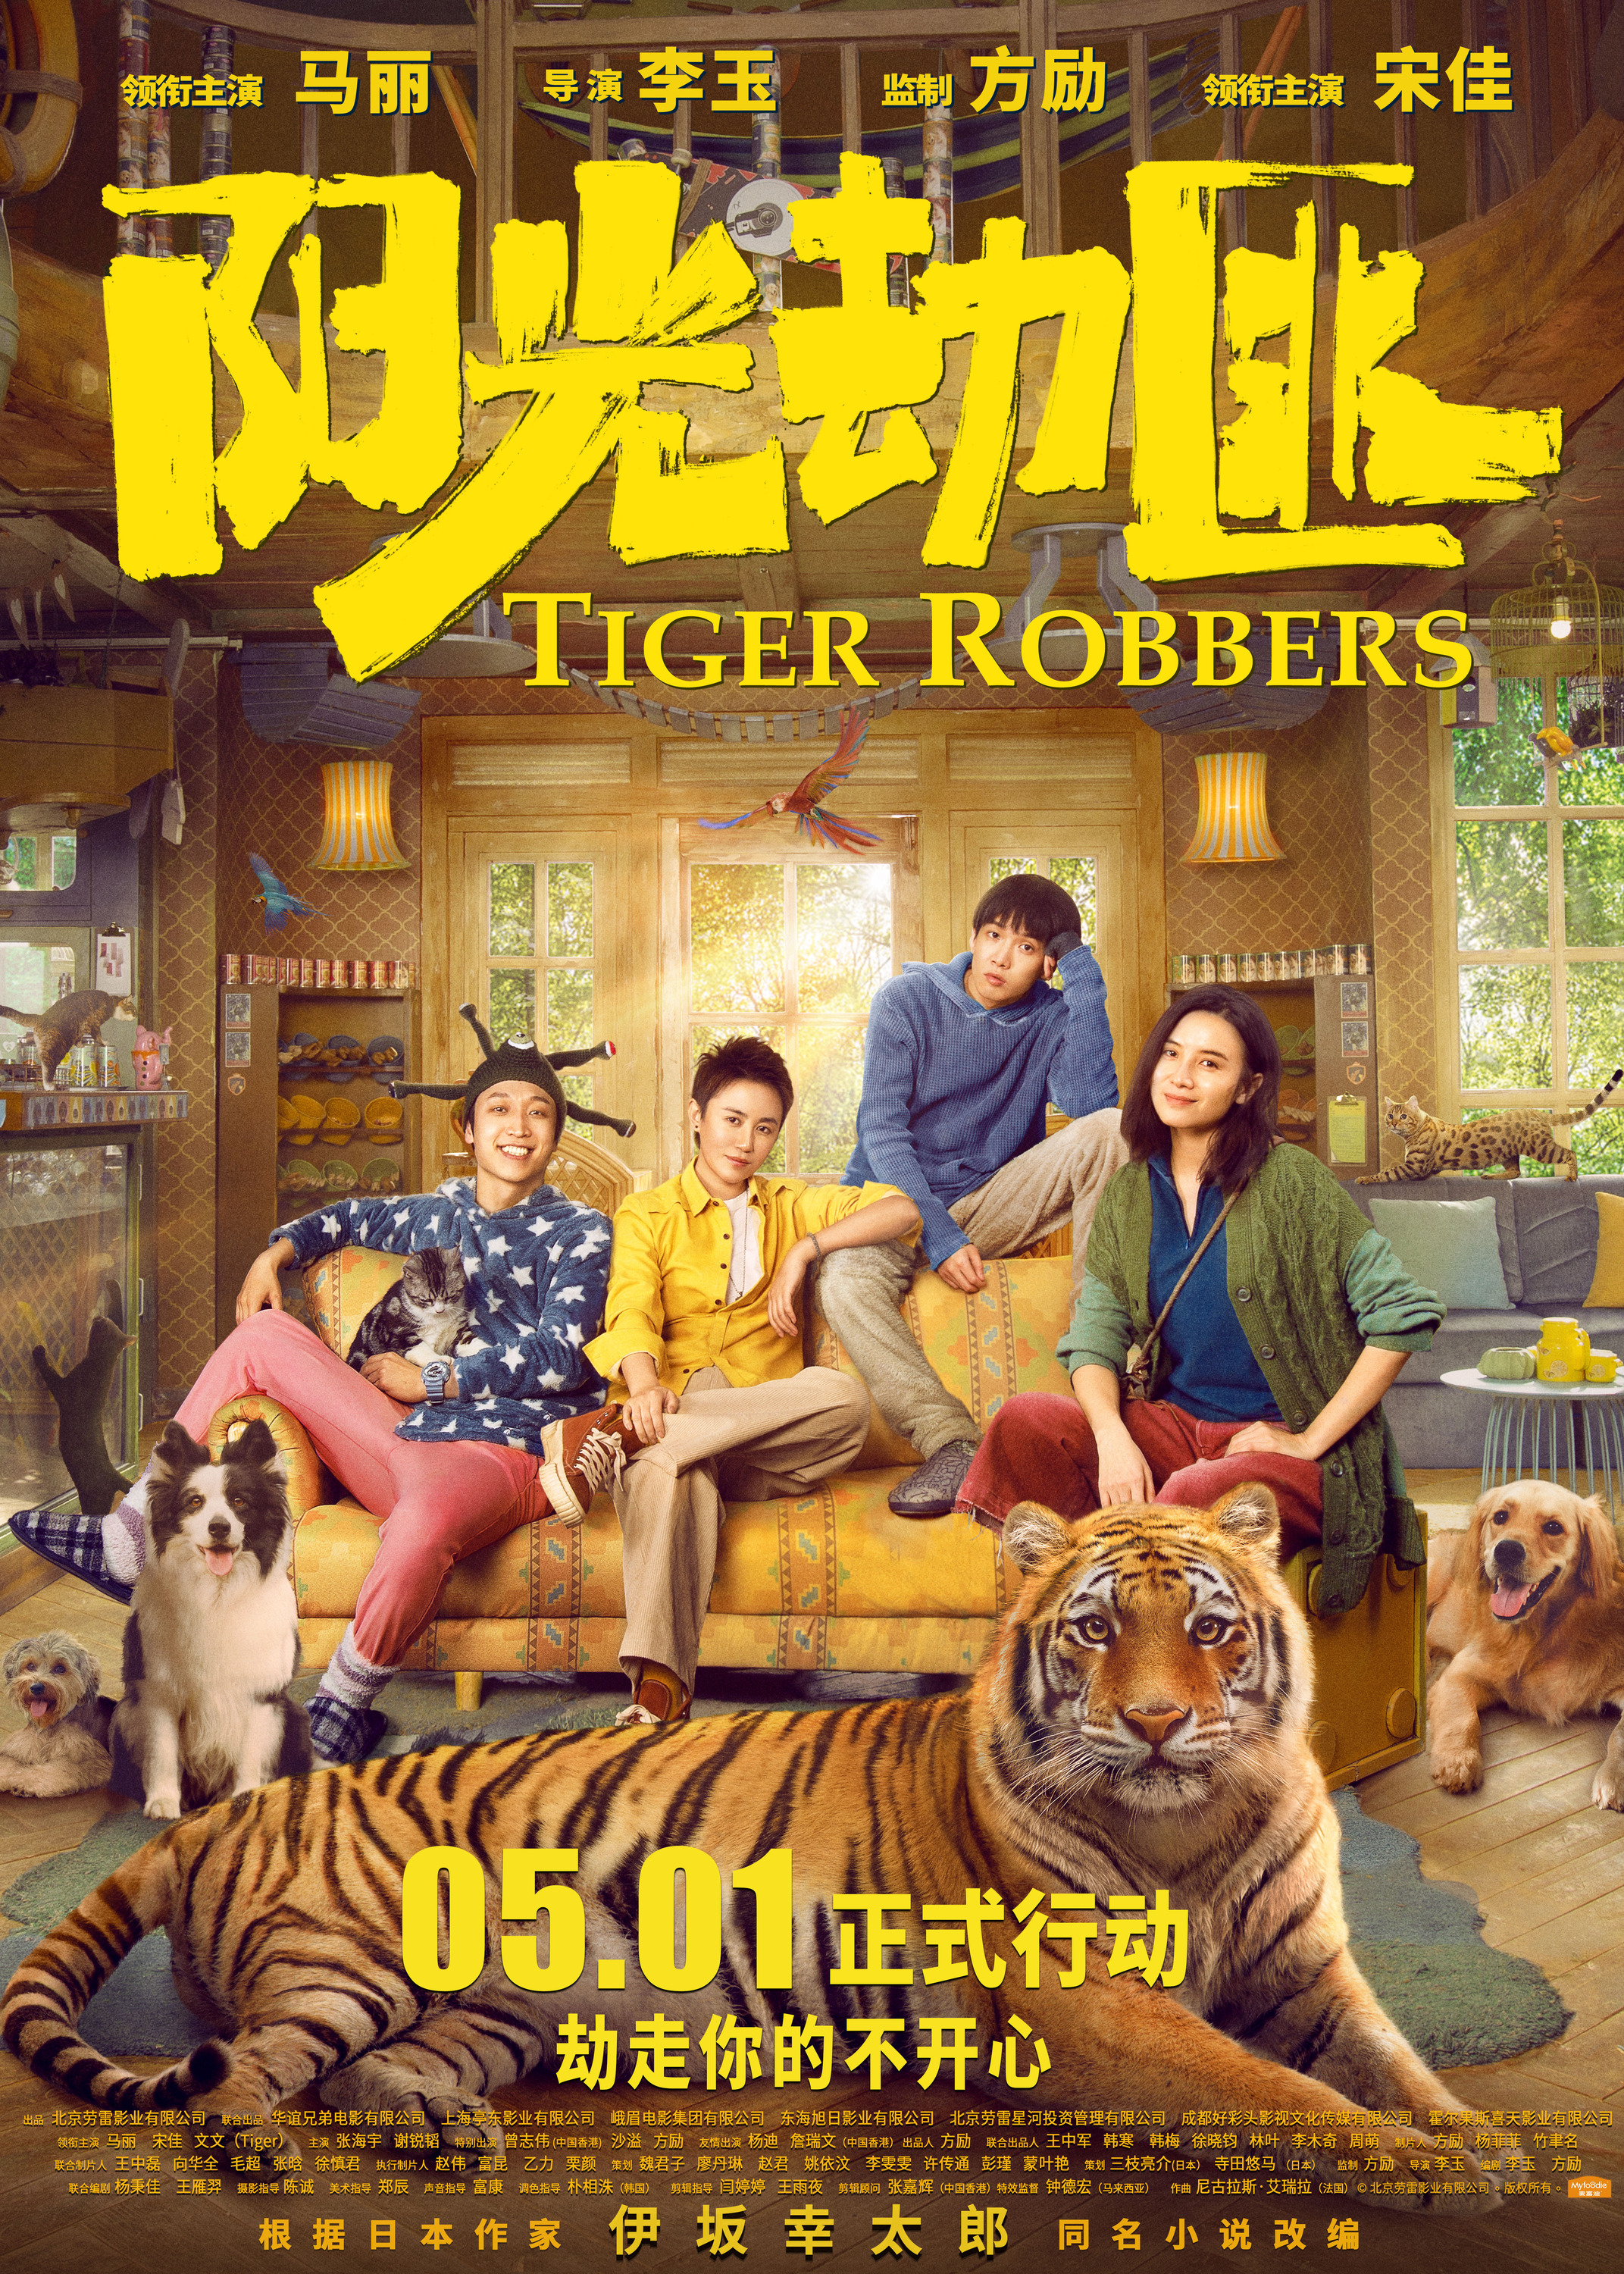 Mega Sized Movie Poster Image for Yang Guang Bu Shi Jie Fei (#3 of 3)